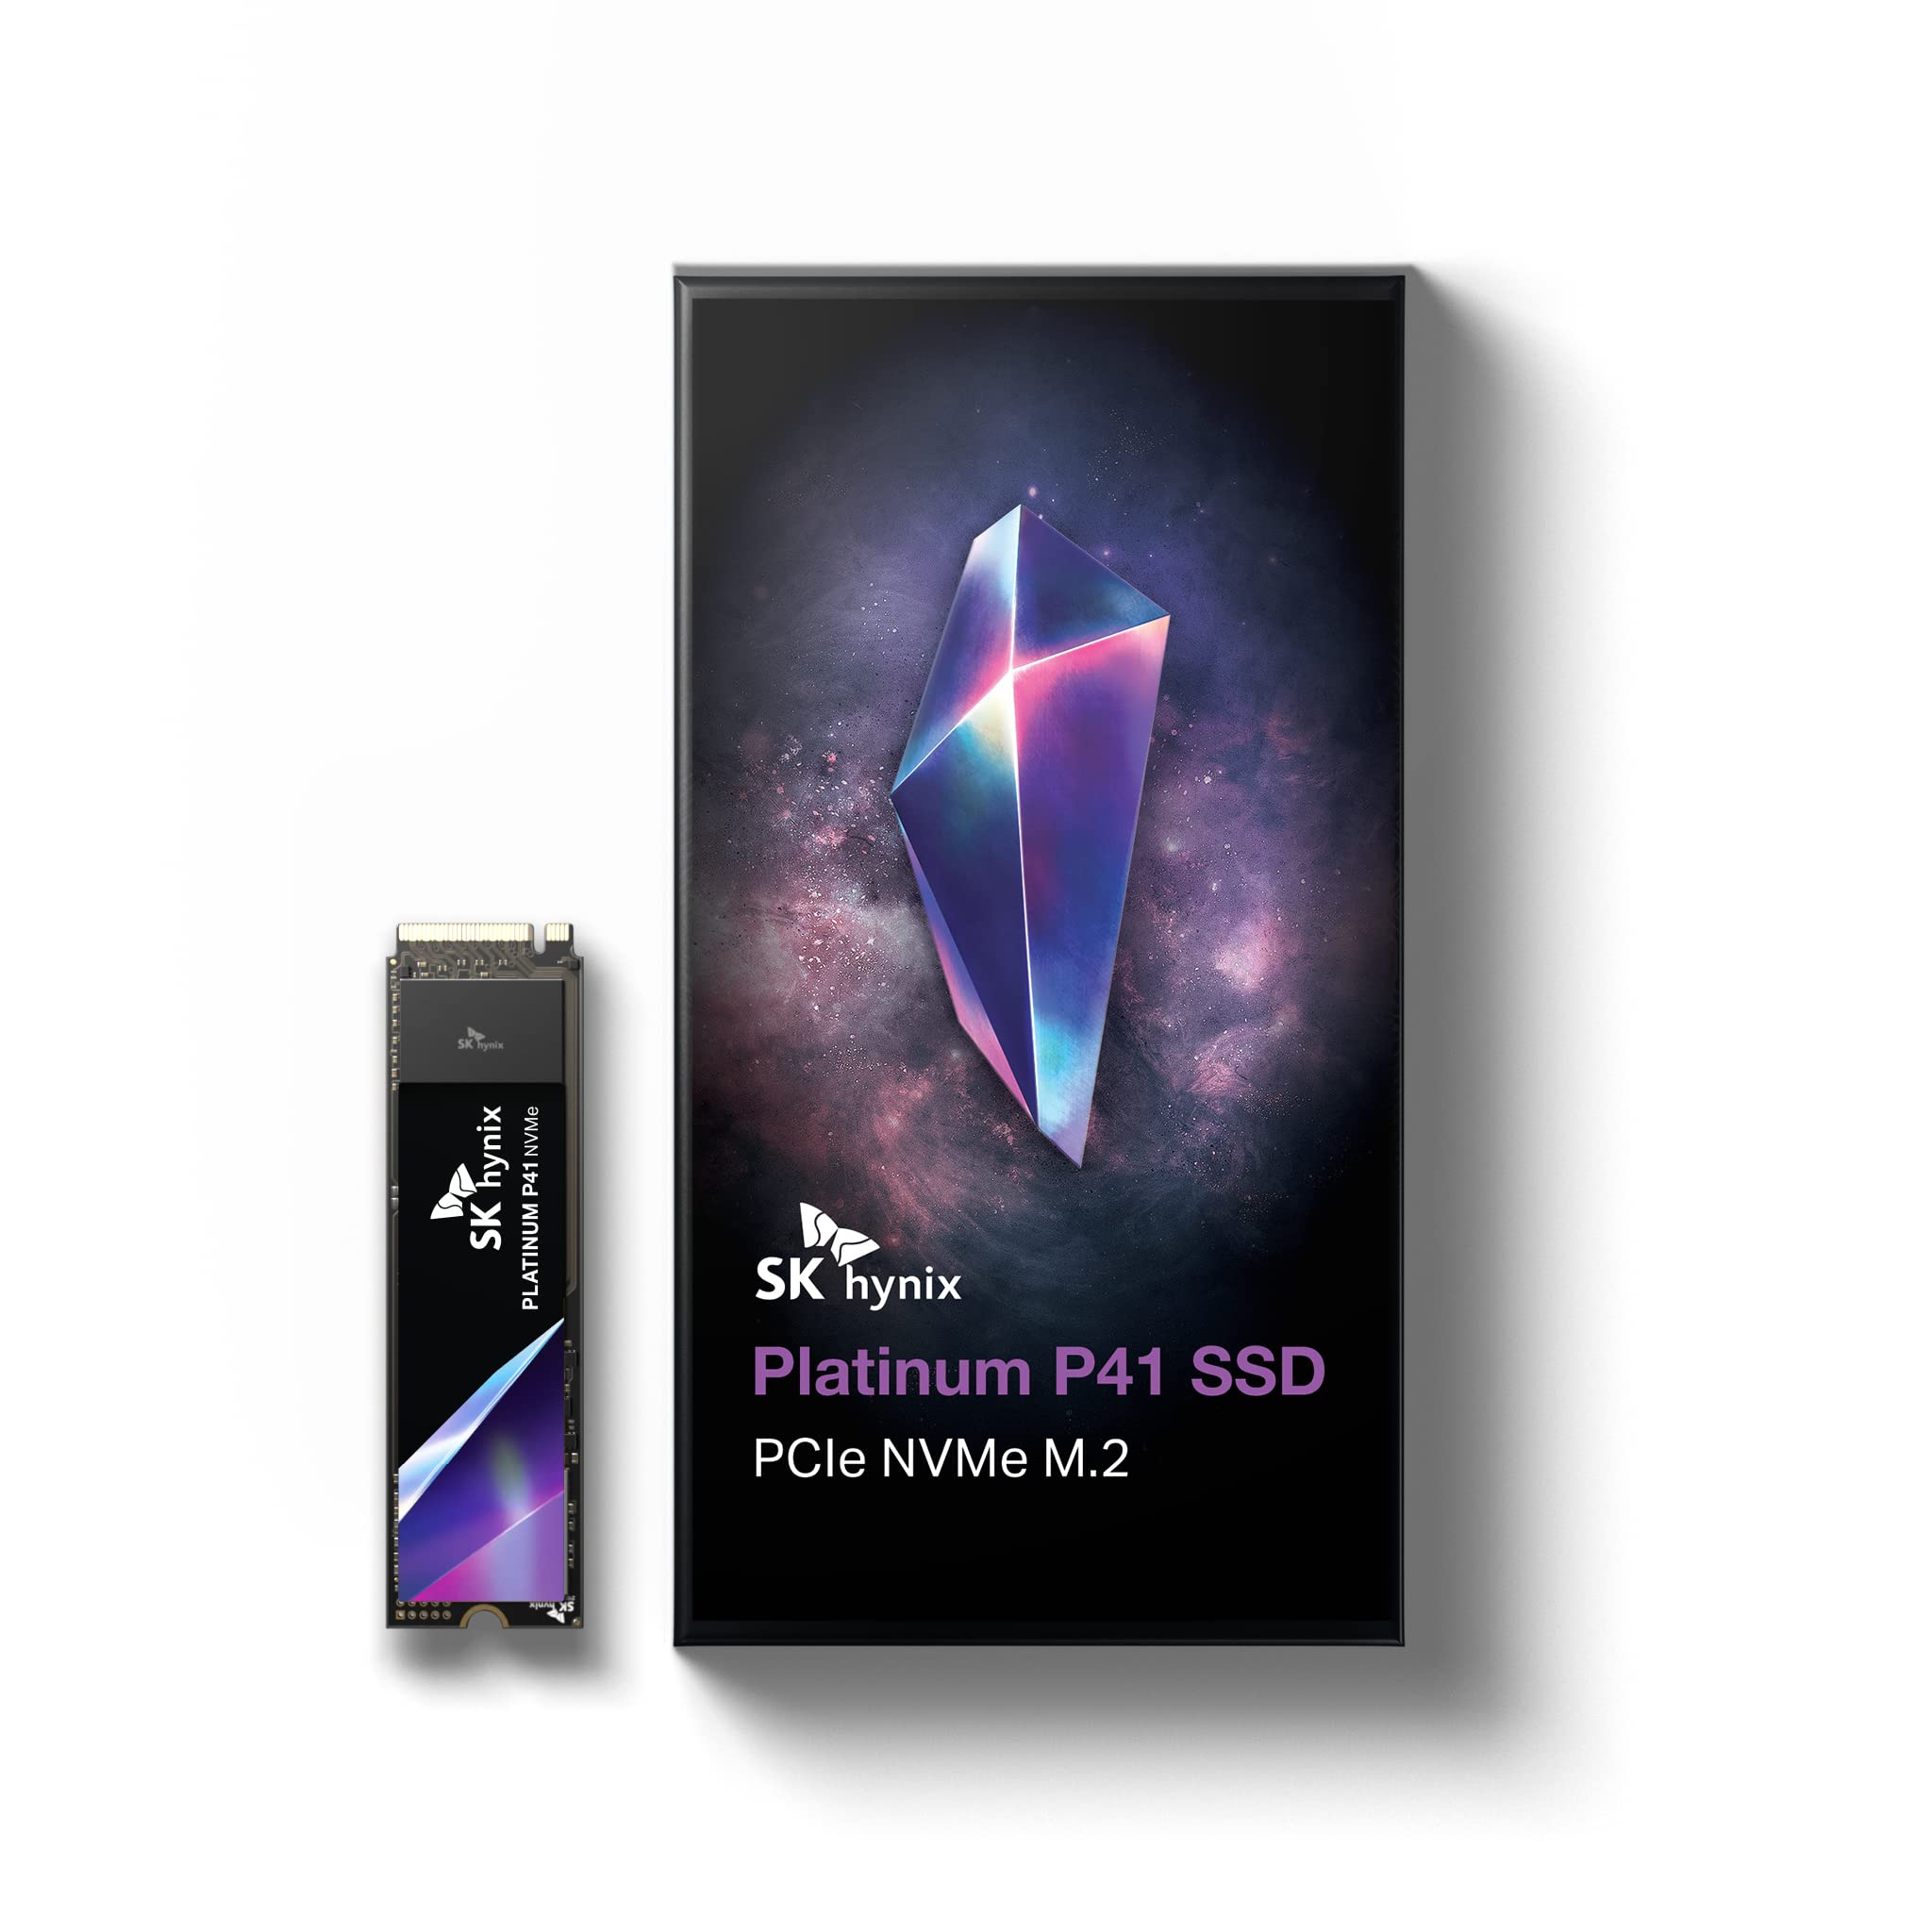 SK hynix Platinum P41 1TB PCIe NVMe Gen4 M.2 2280 Internal SSD - $104.99